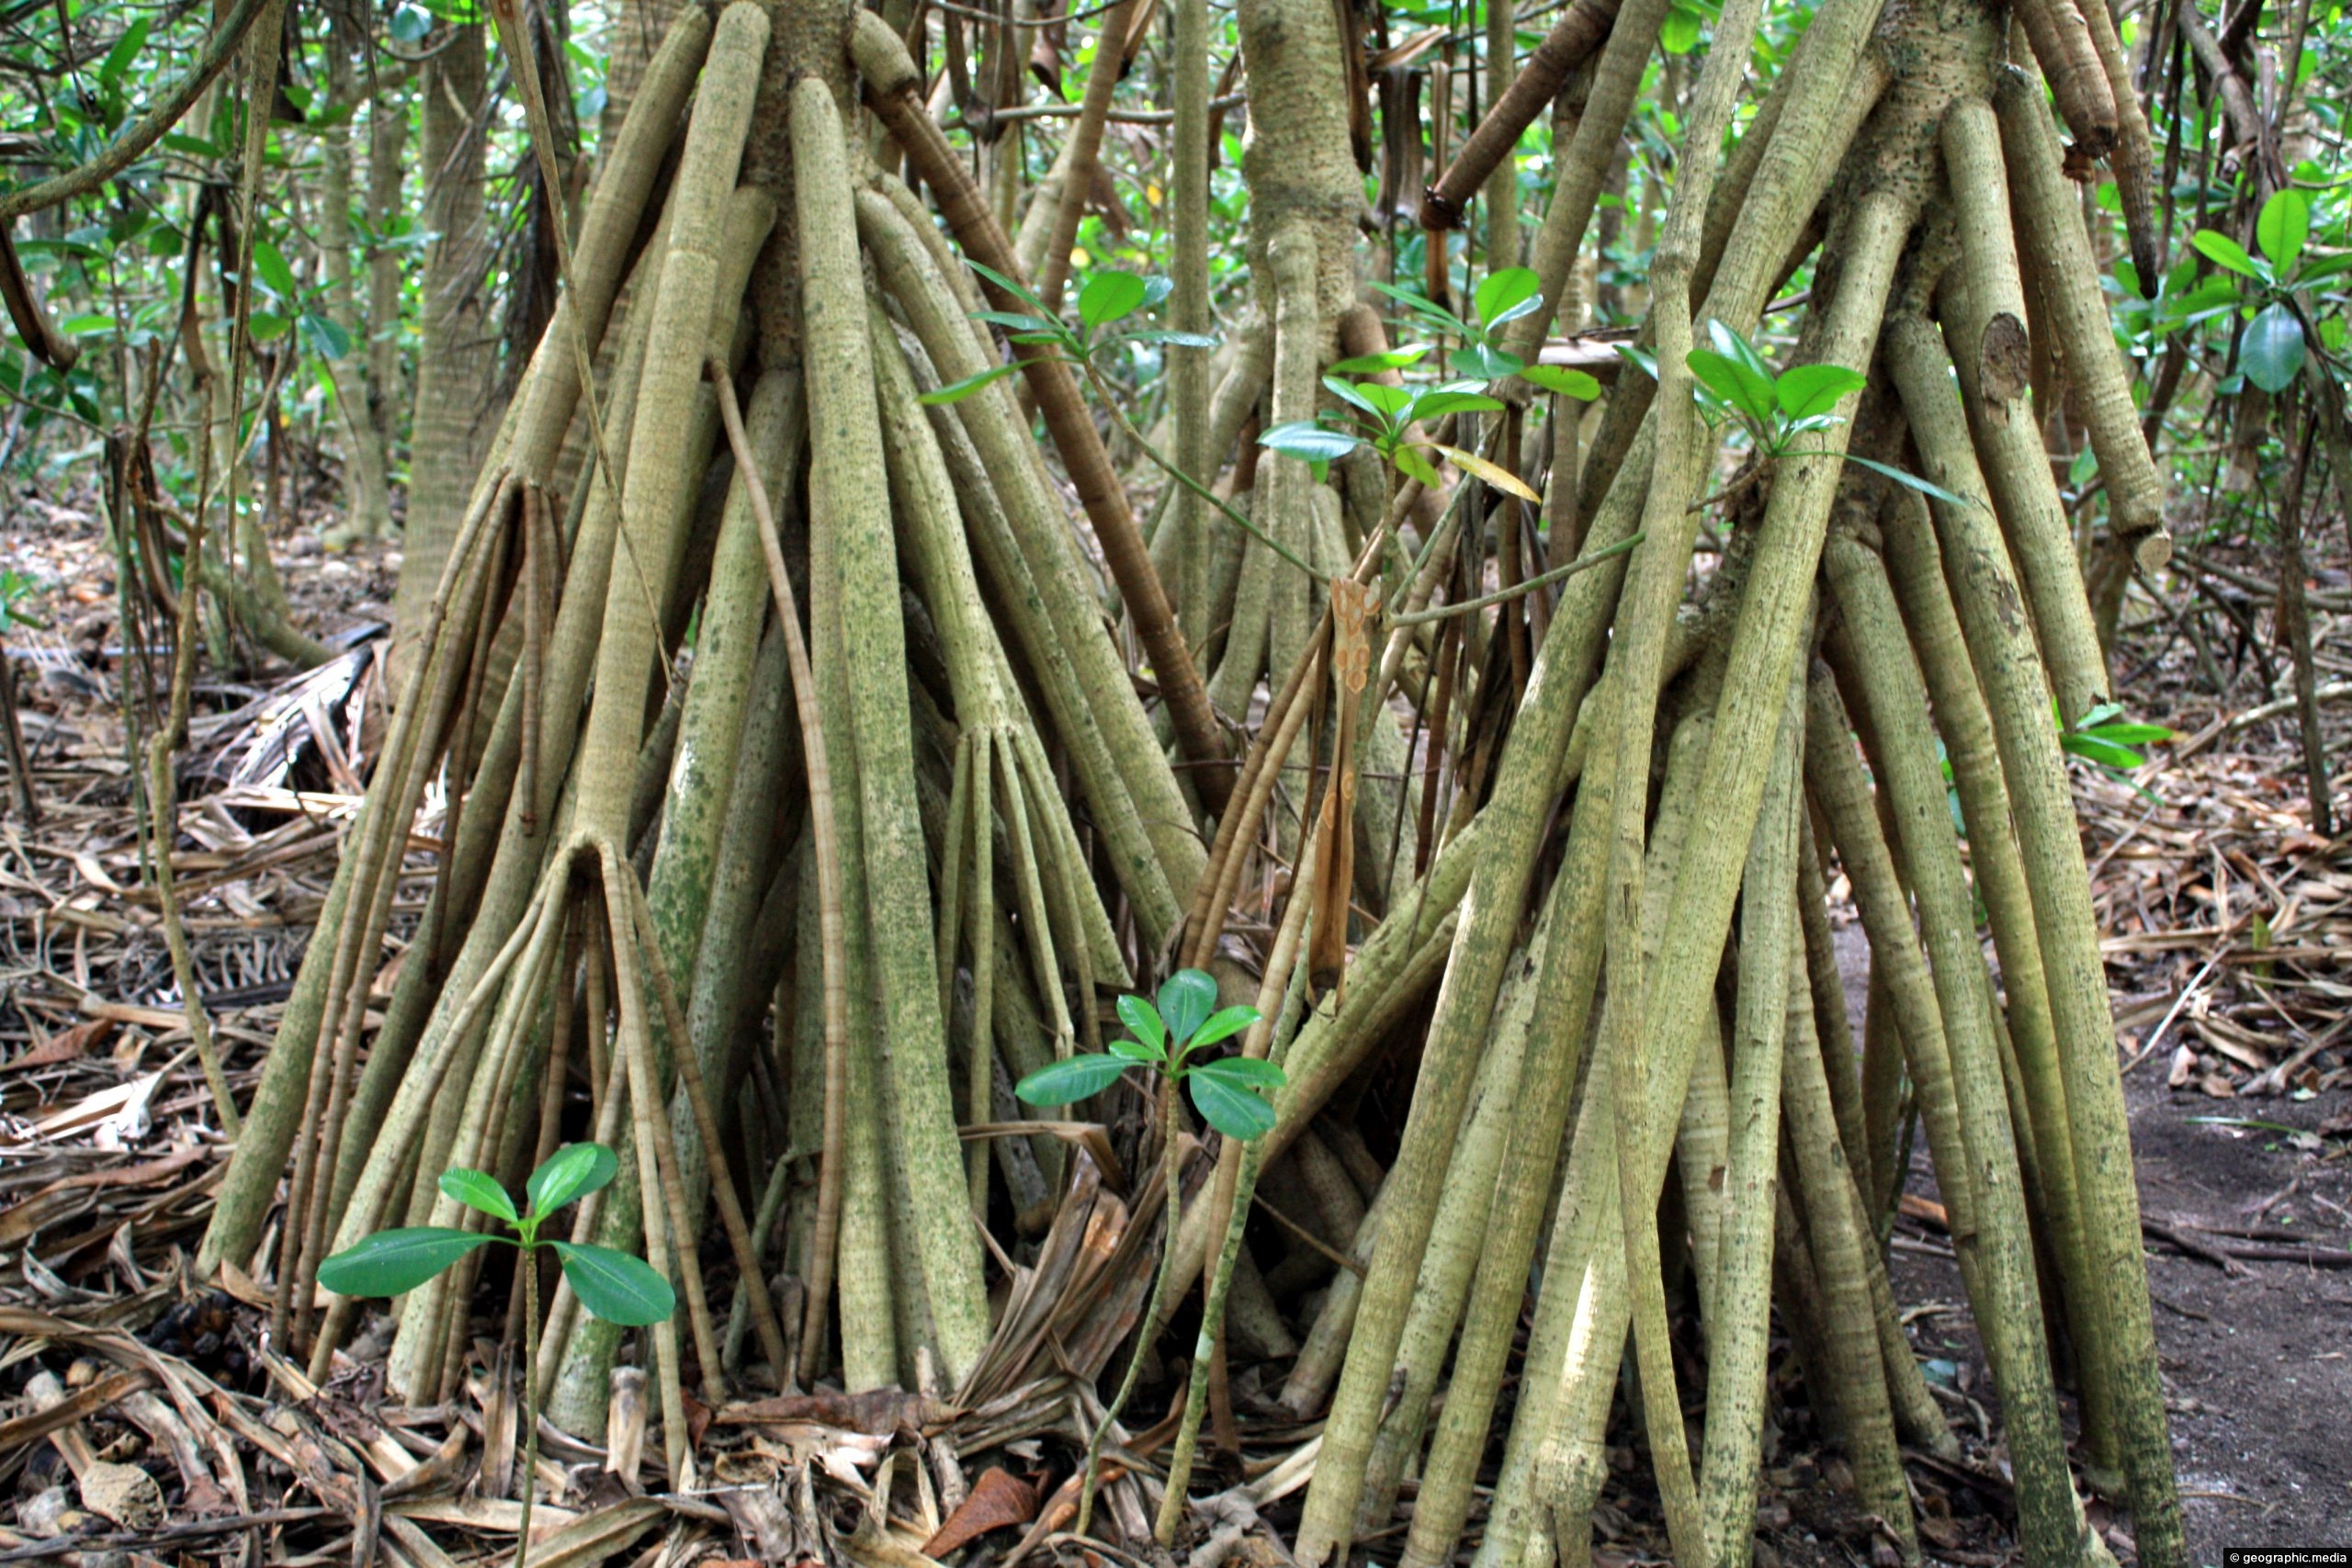 Pandanus Palm roots on Fafa Island